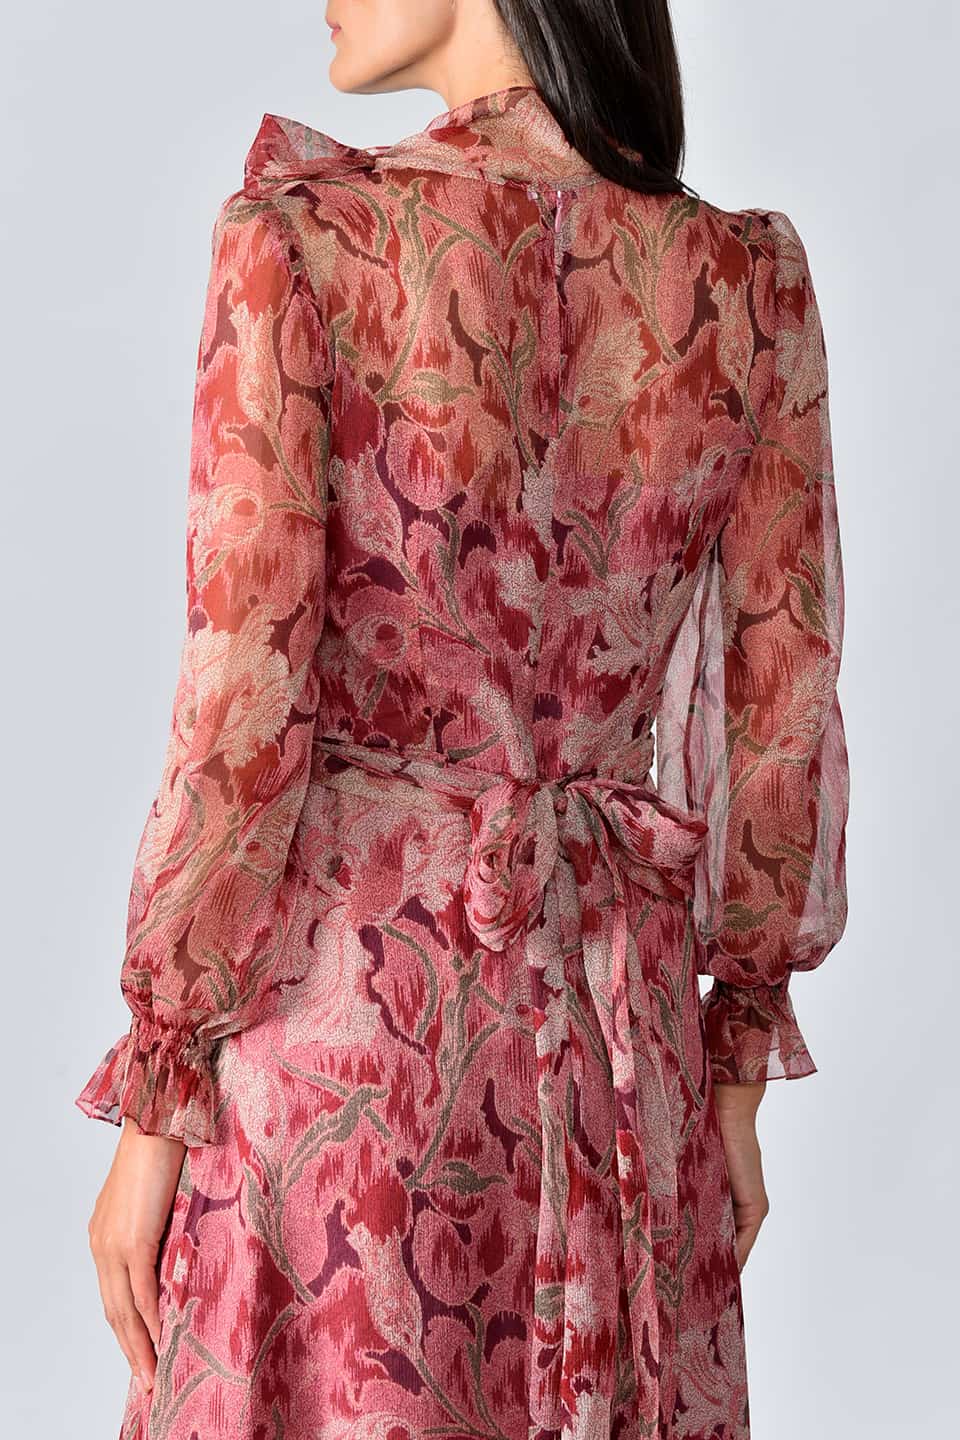 Model wearing floral print silk chiffon long dress in a burgundy garden print from stylist Vilshenko, showing back details